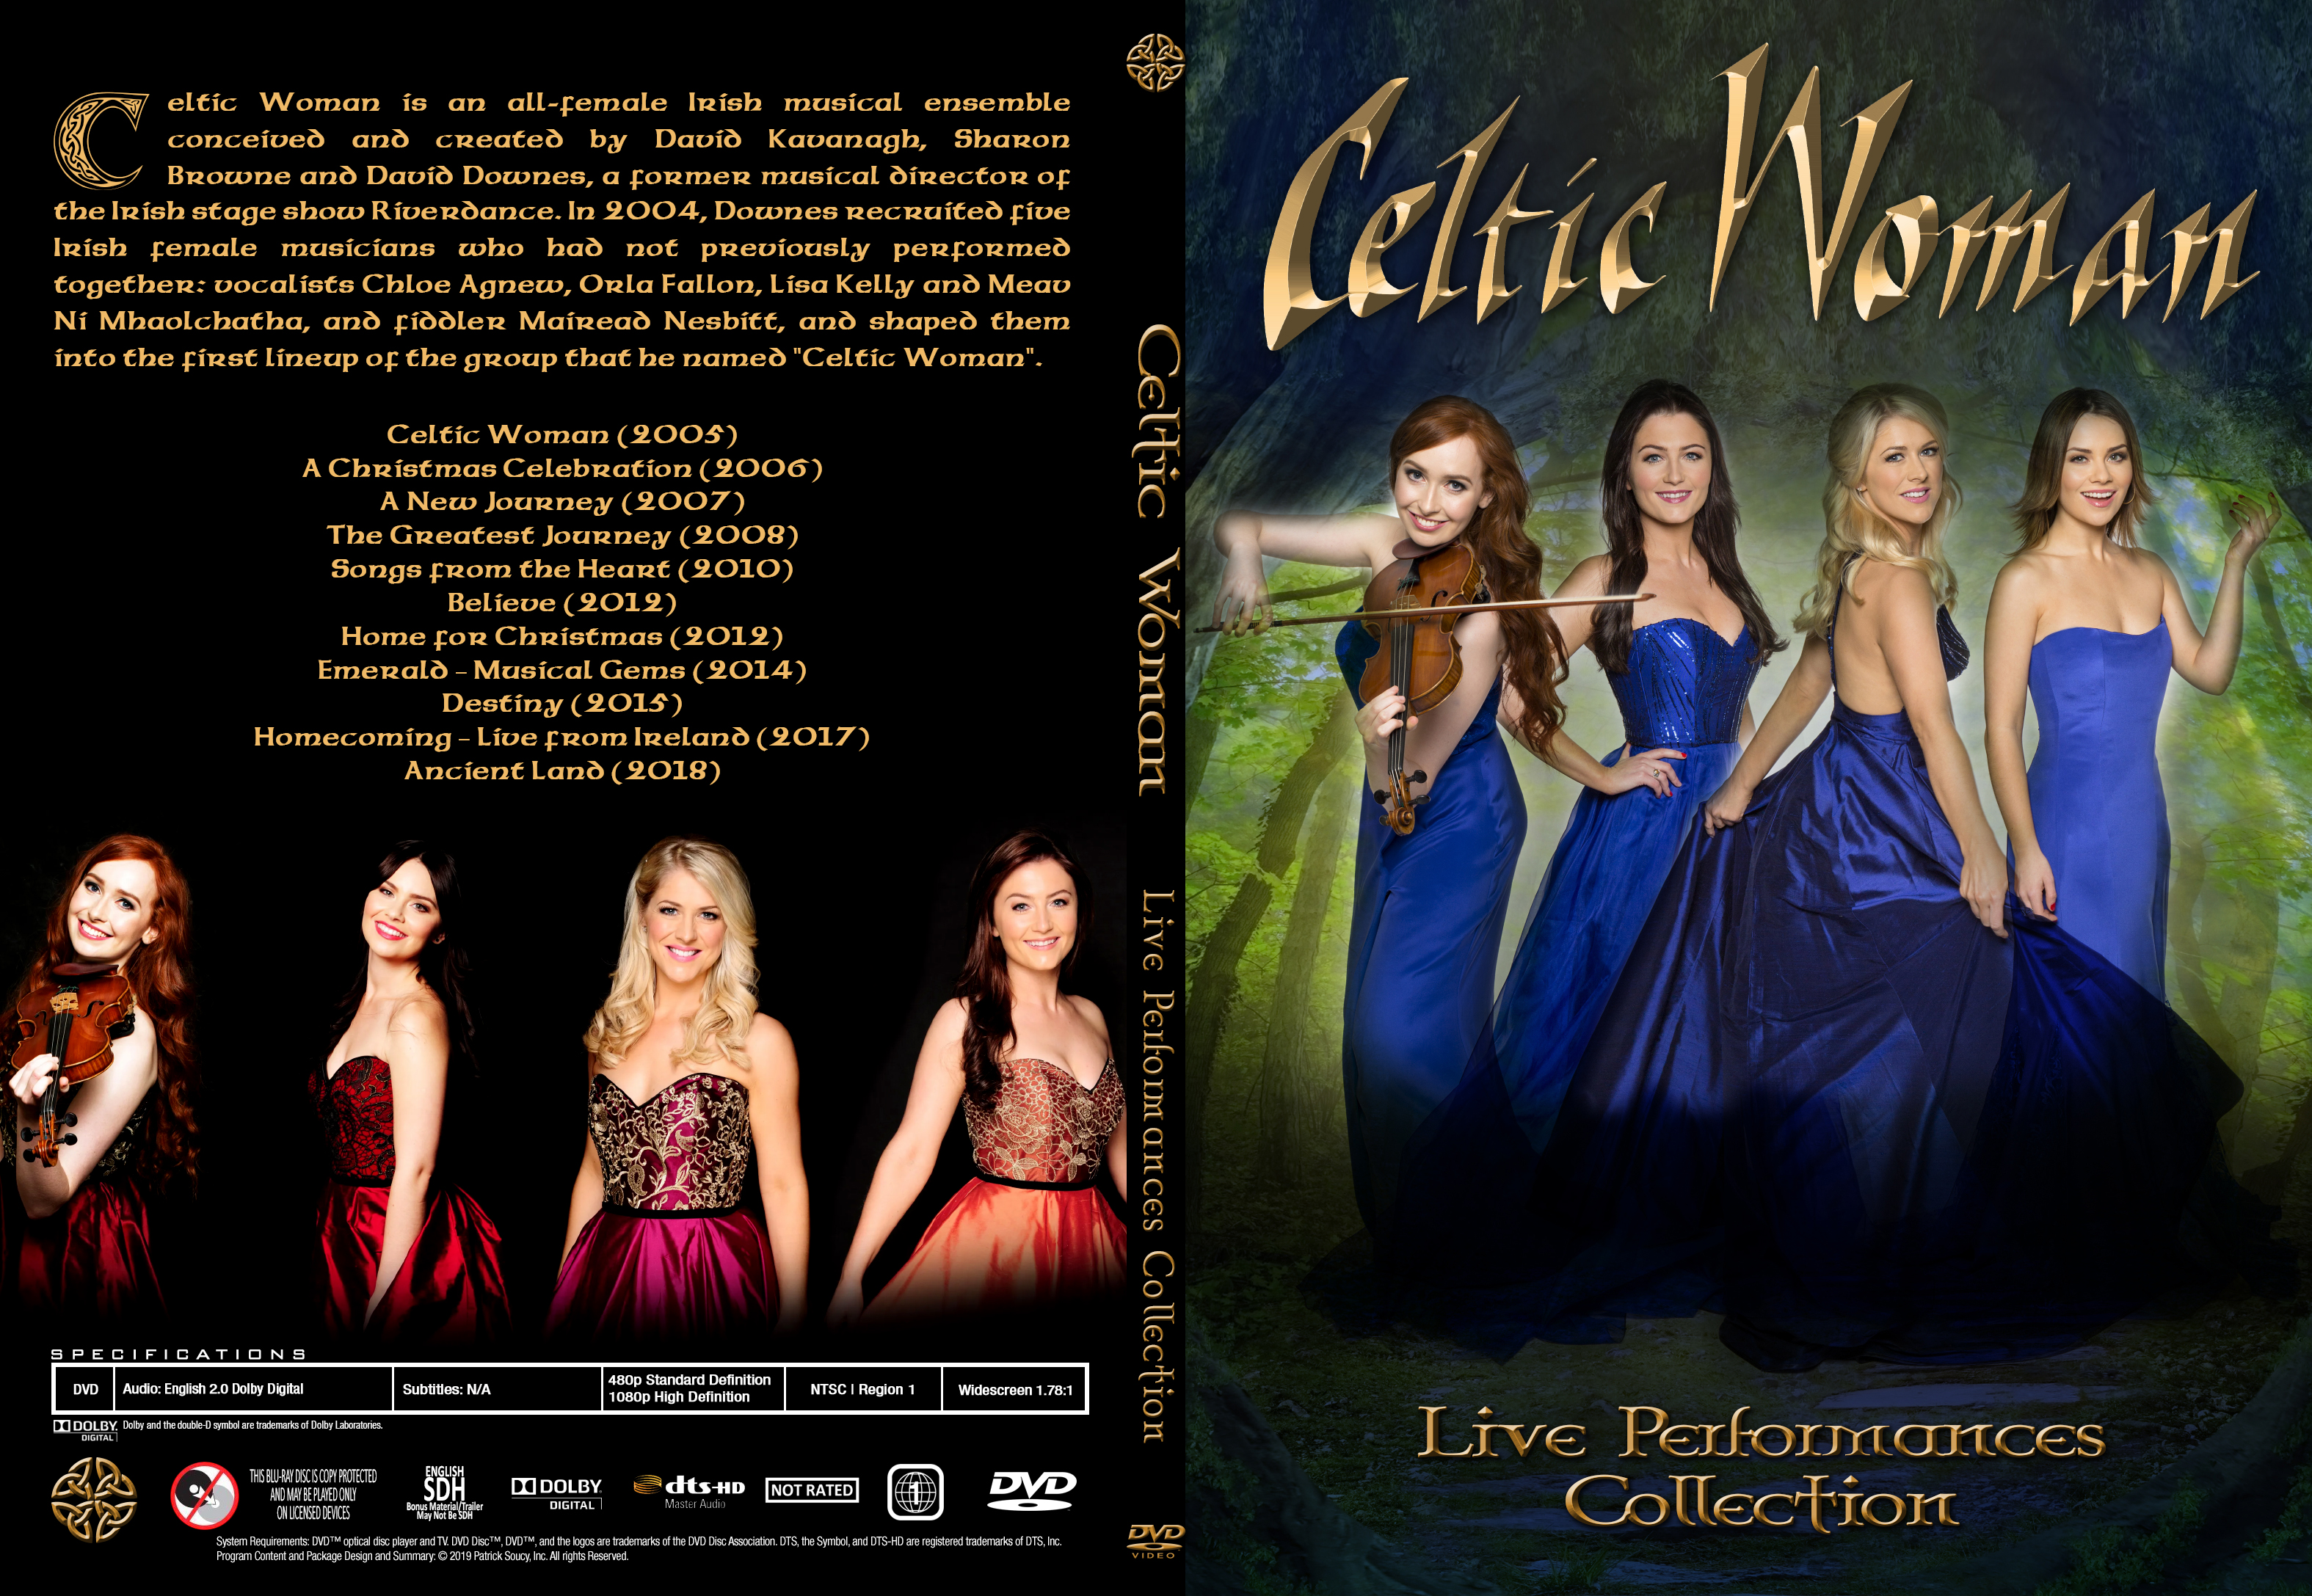 Nadruk Interessant wakker worden DVD - Celtic Woman - Live Performances Collection by Morsoth on DeviantArt